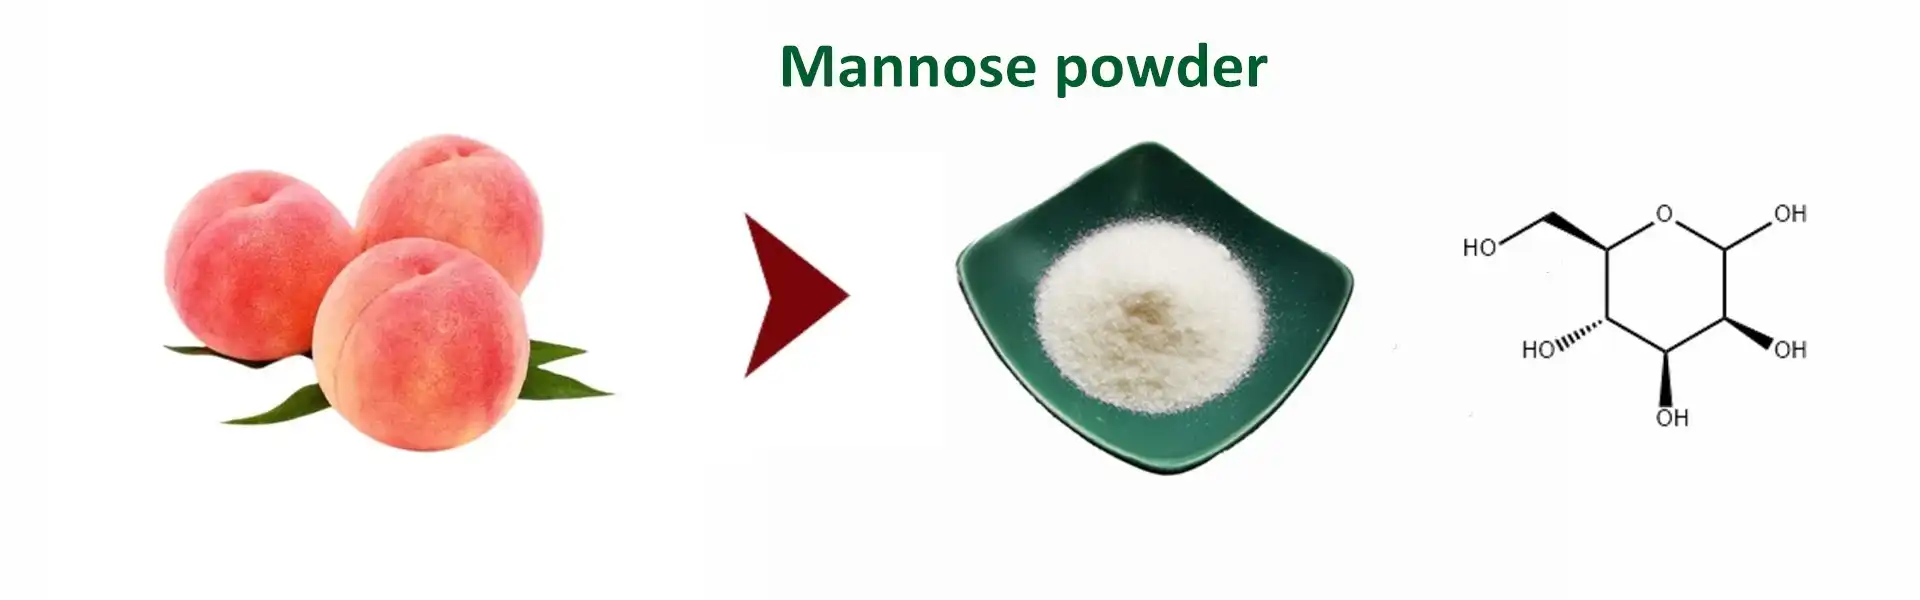 Mannose powder